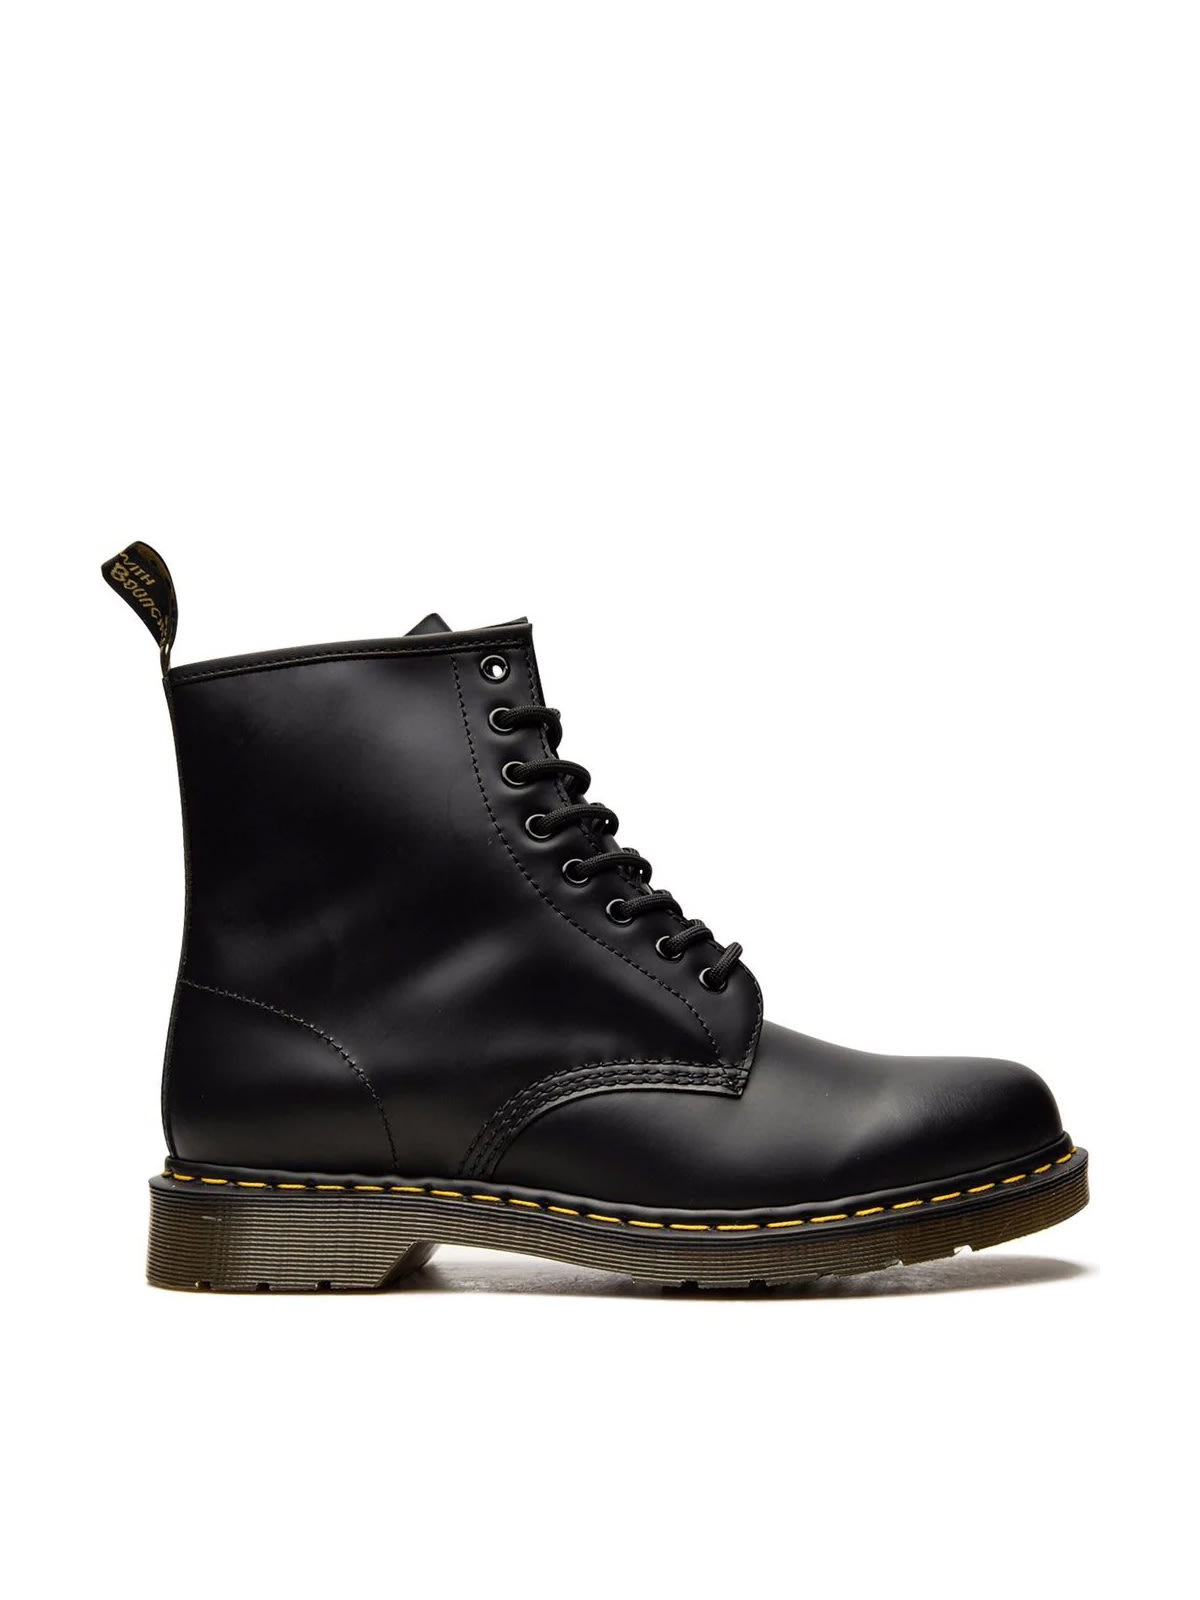 Dr. Martens 1460 Black Smooth Boot